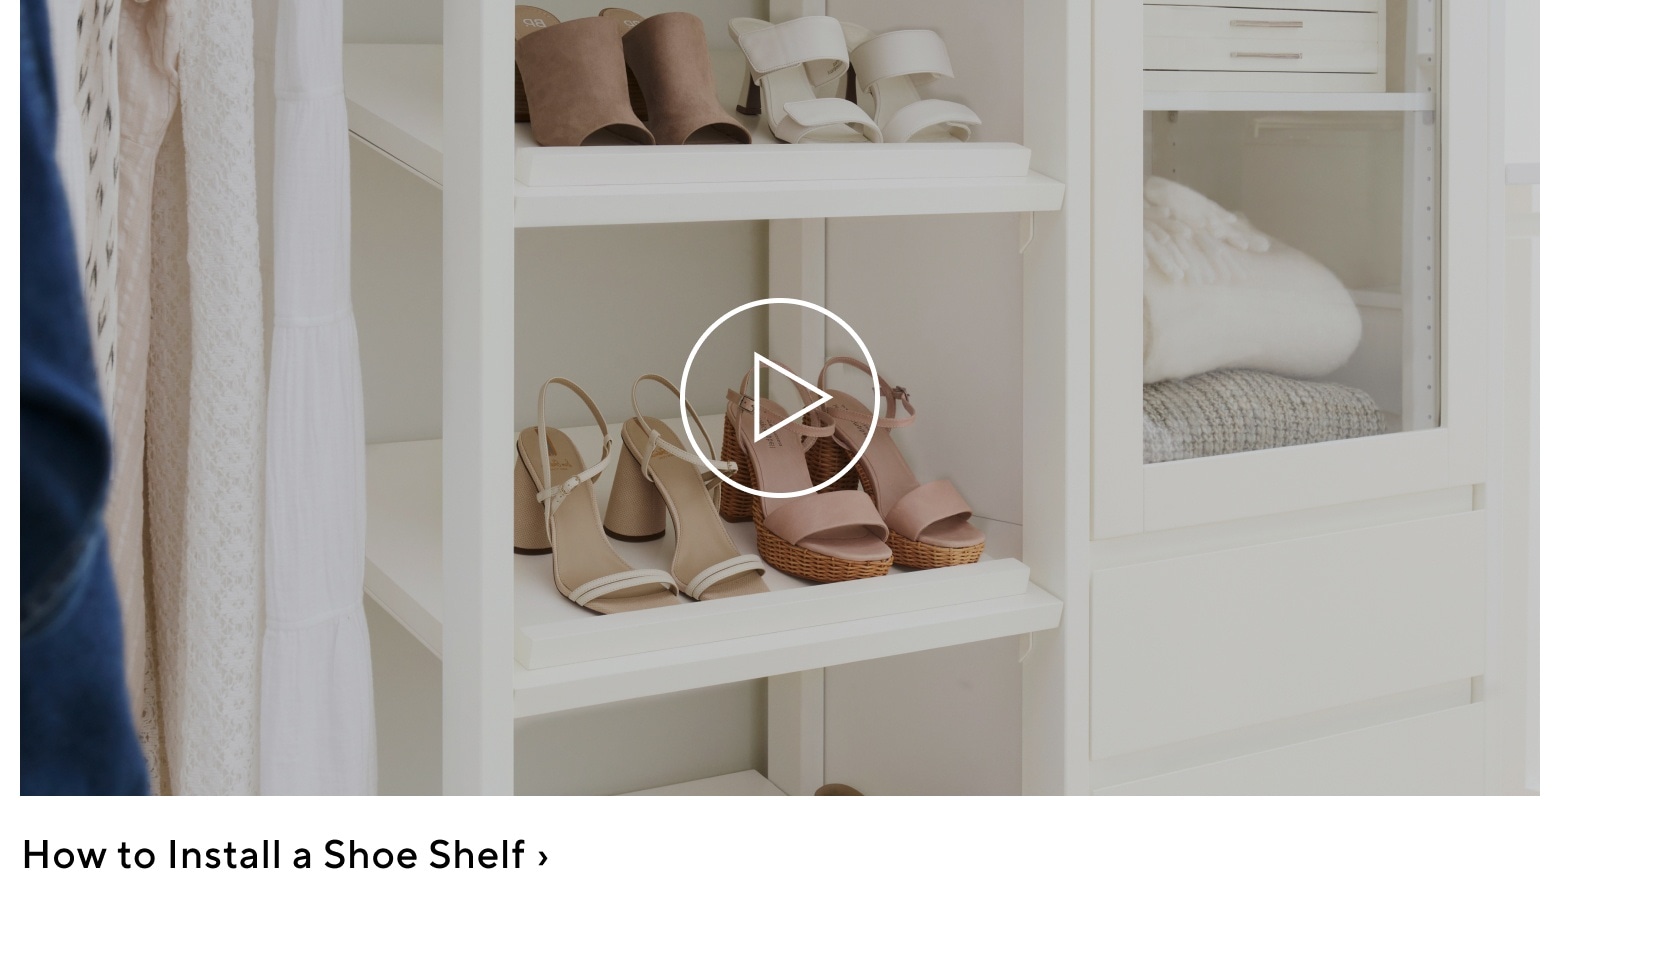 How to Install a Shoe Shelf